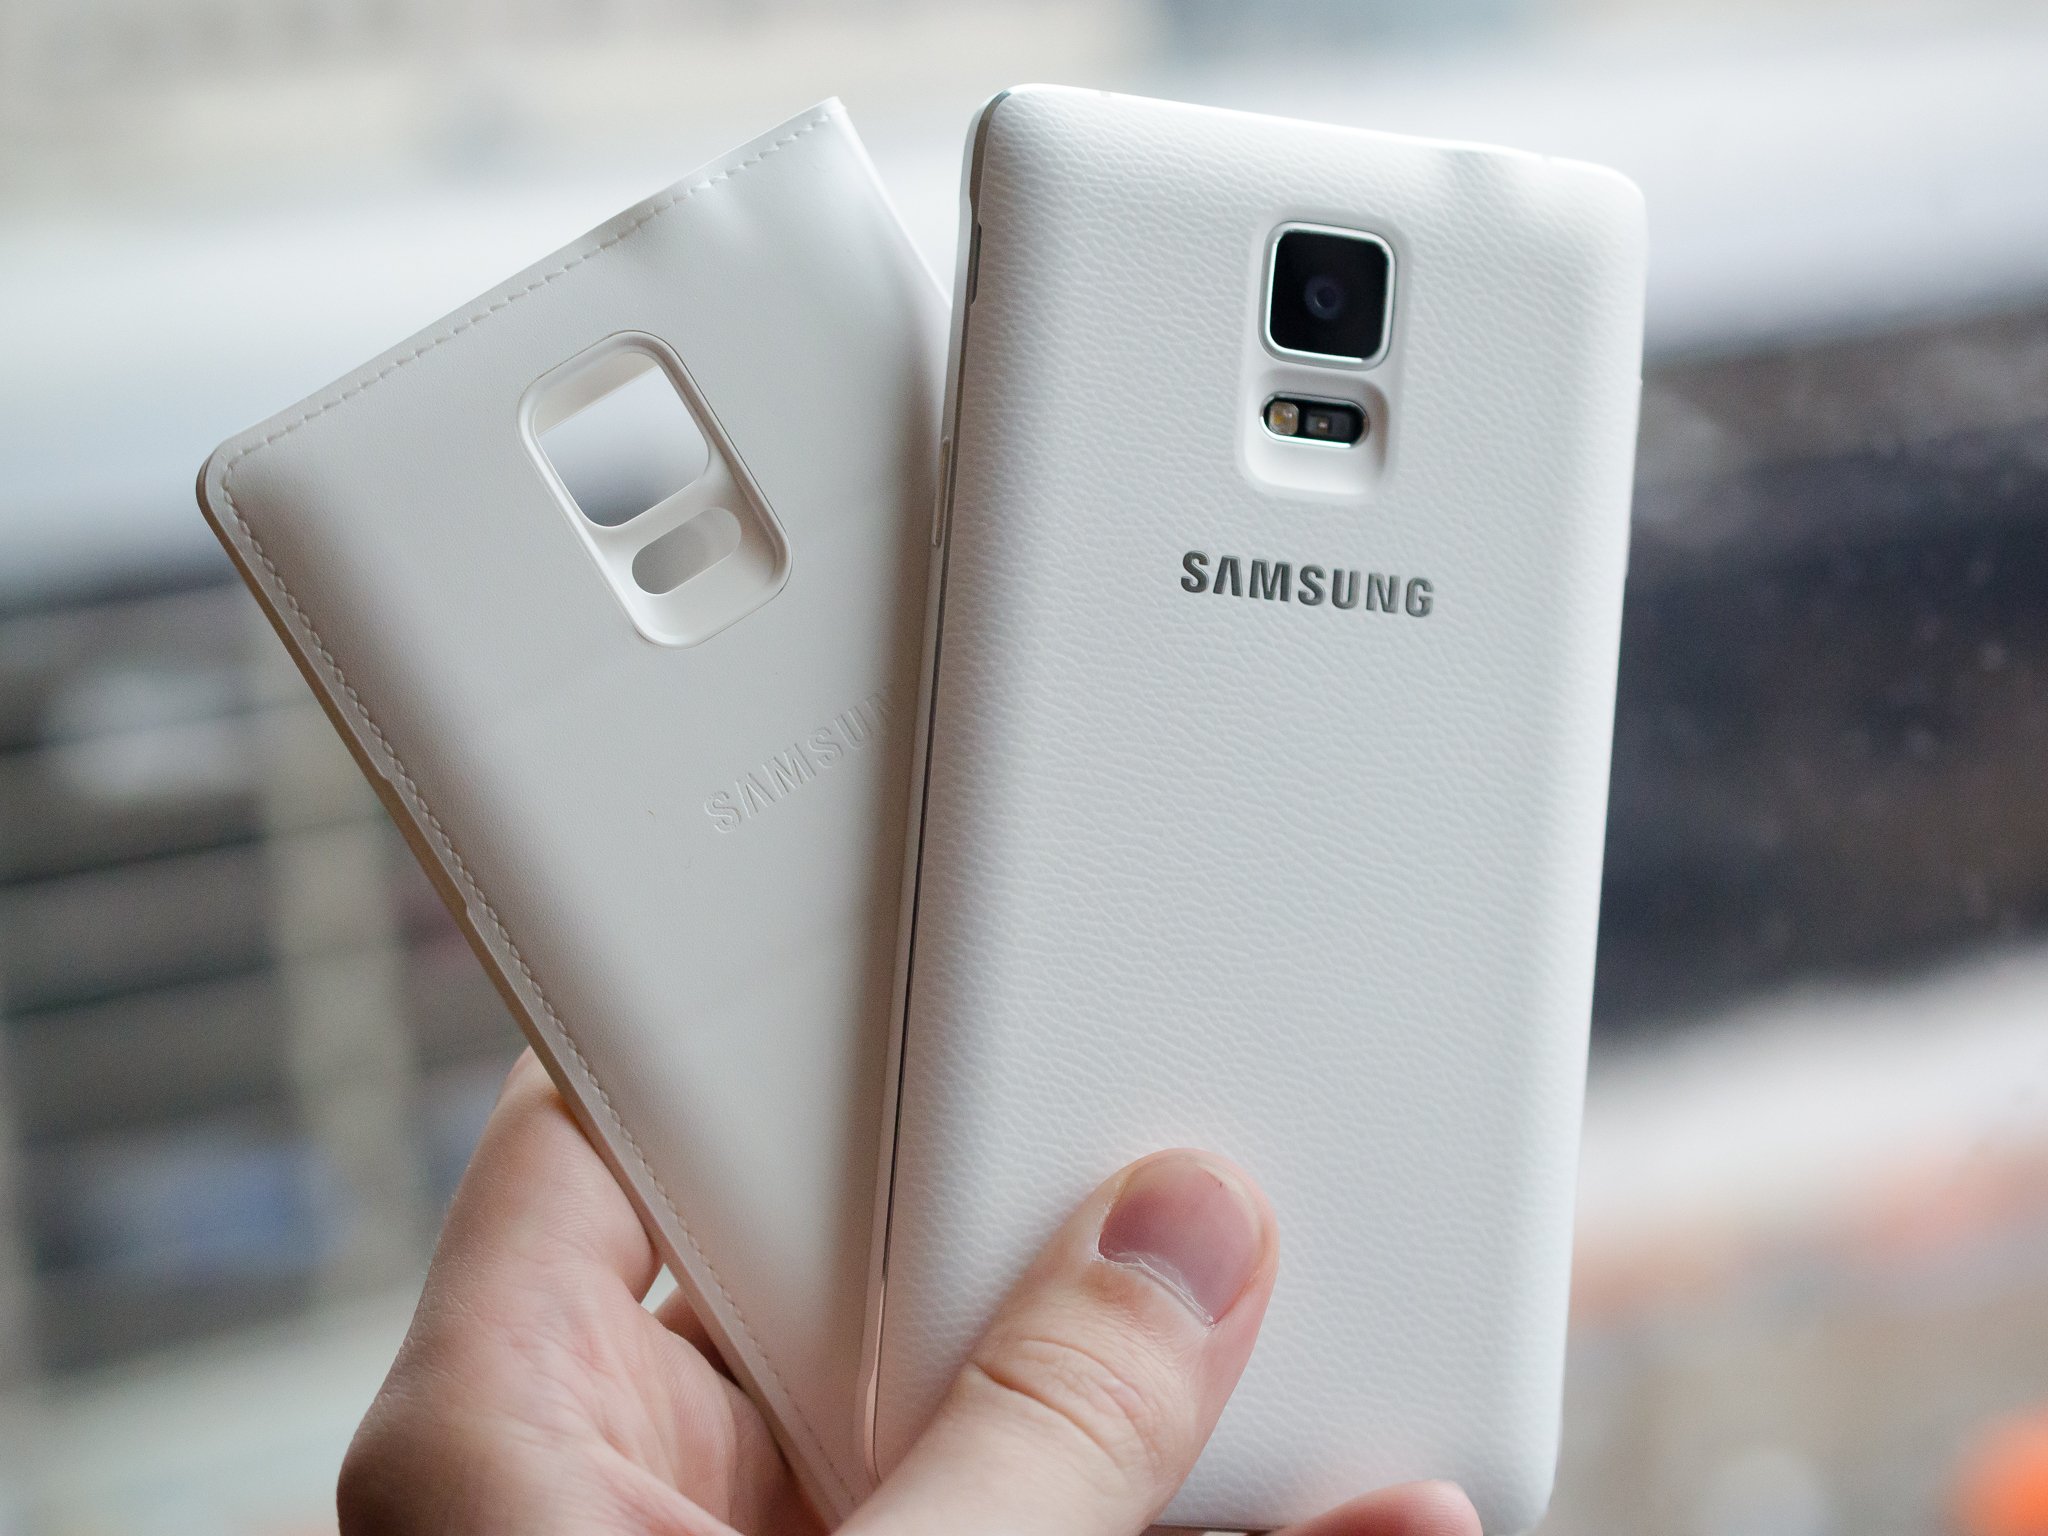 Galaxy Note 4 Qi charging backs